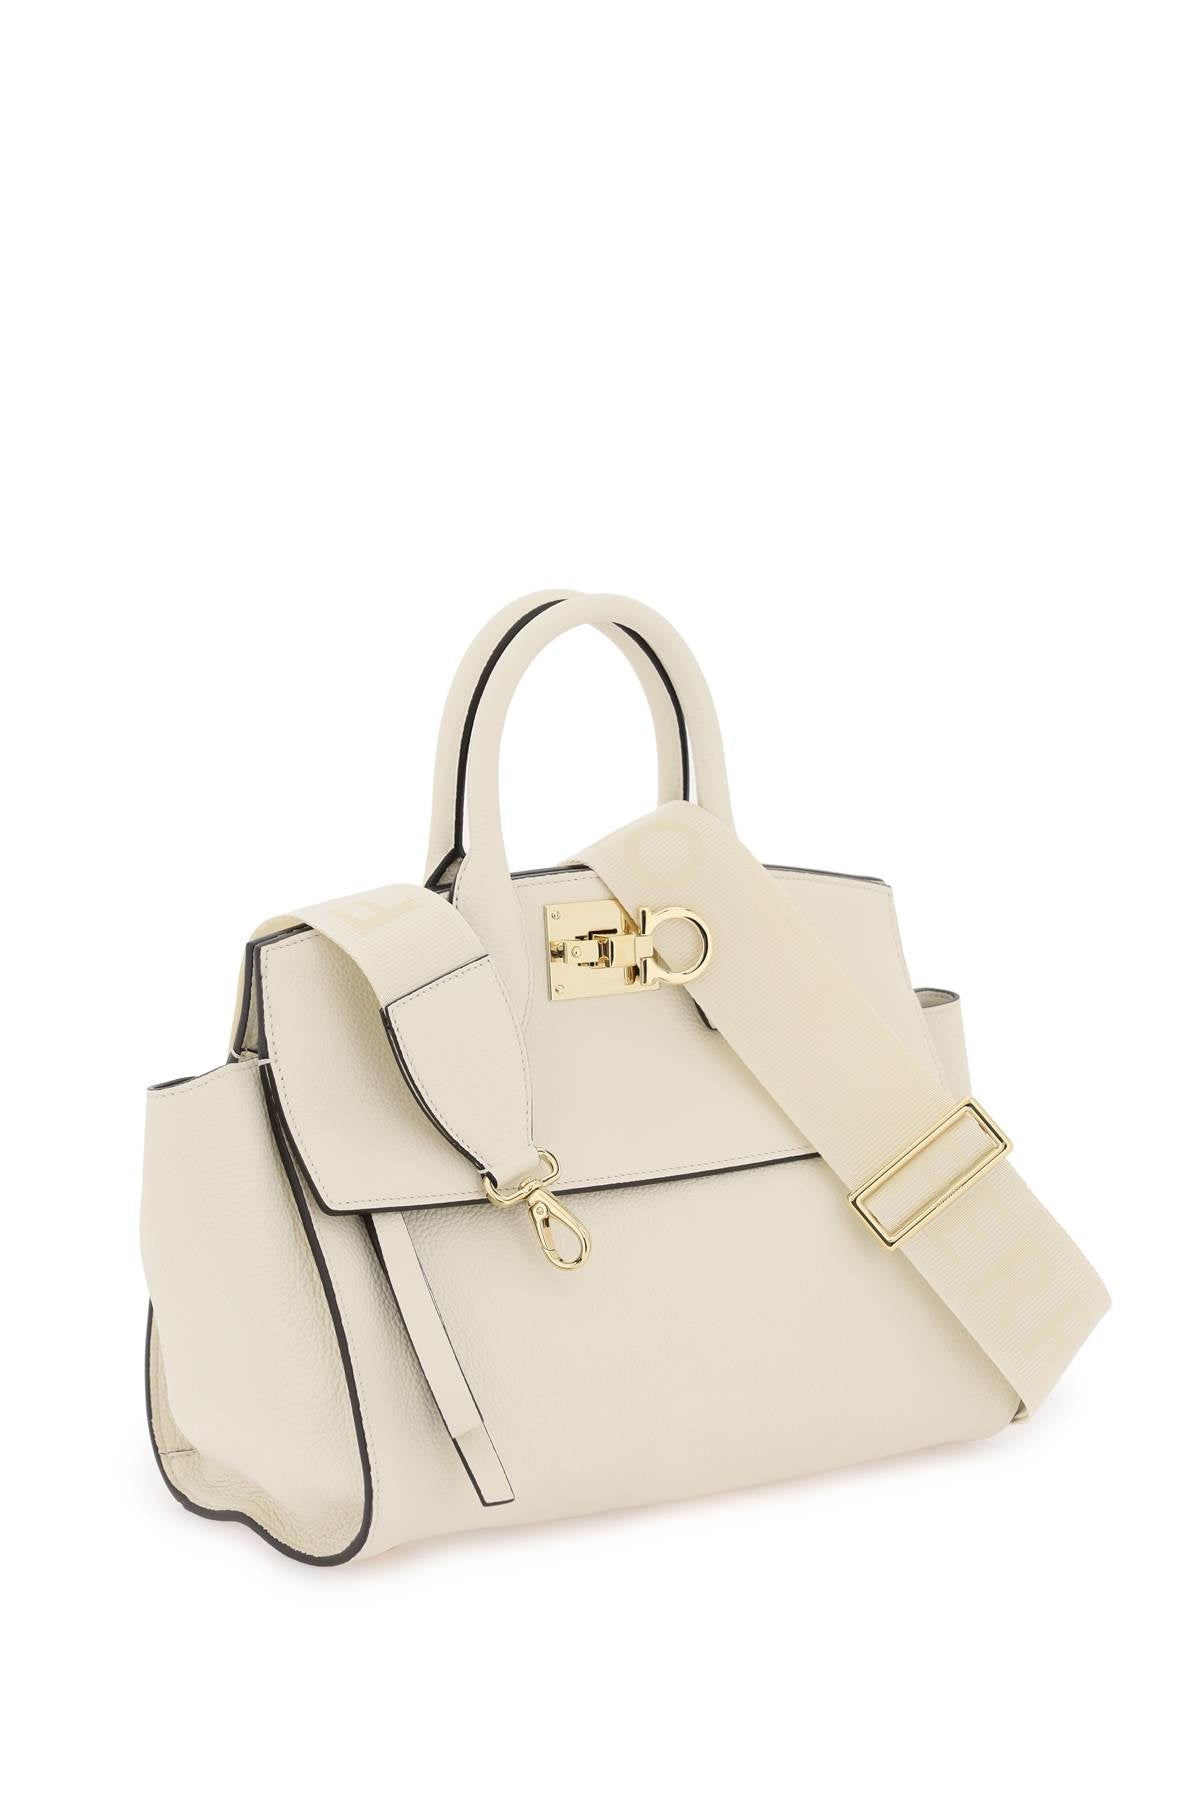 FERRAGAMO Grained Leather Studio Handbag in White for Women